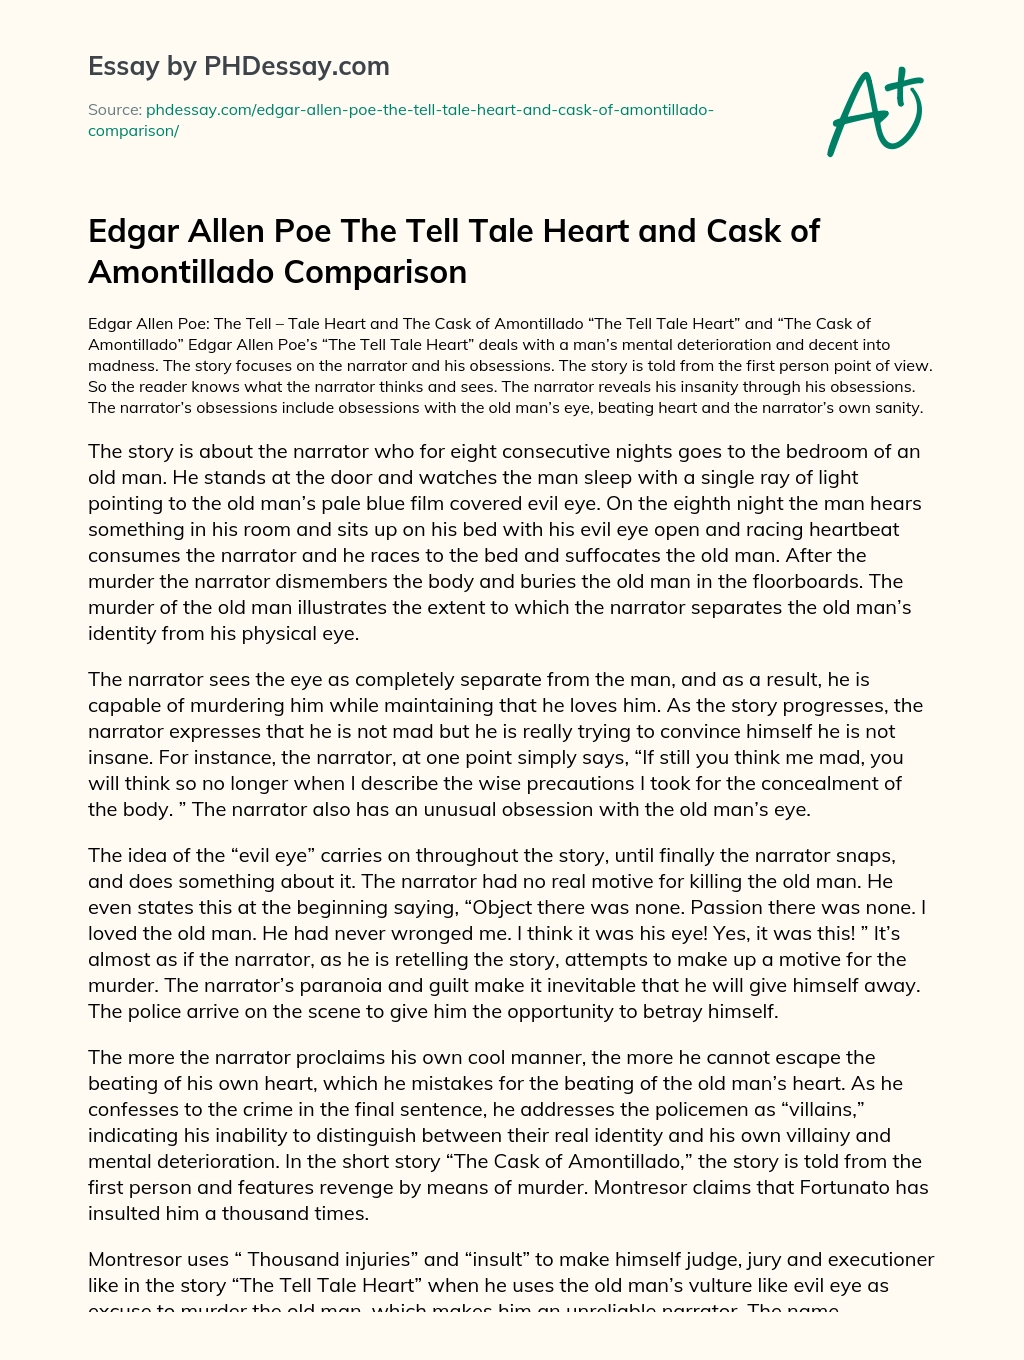 Edgar Allen Poe The Tell Tale Heart and  Cask of Amontillado Comparison essay